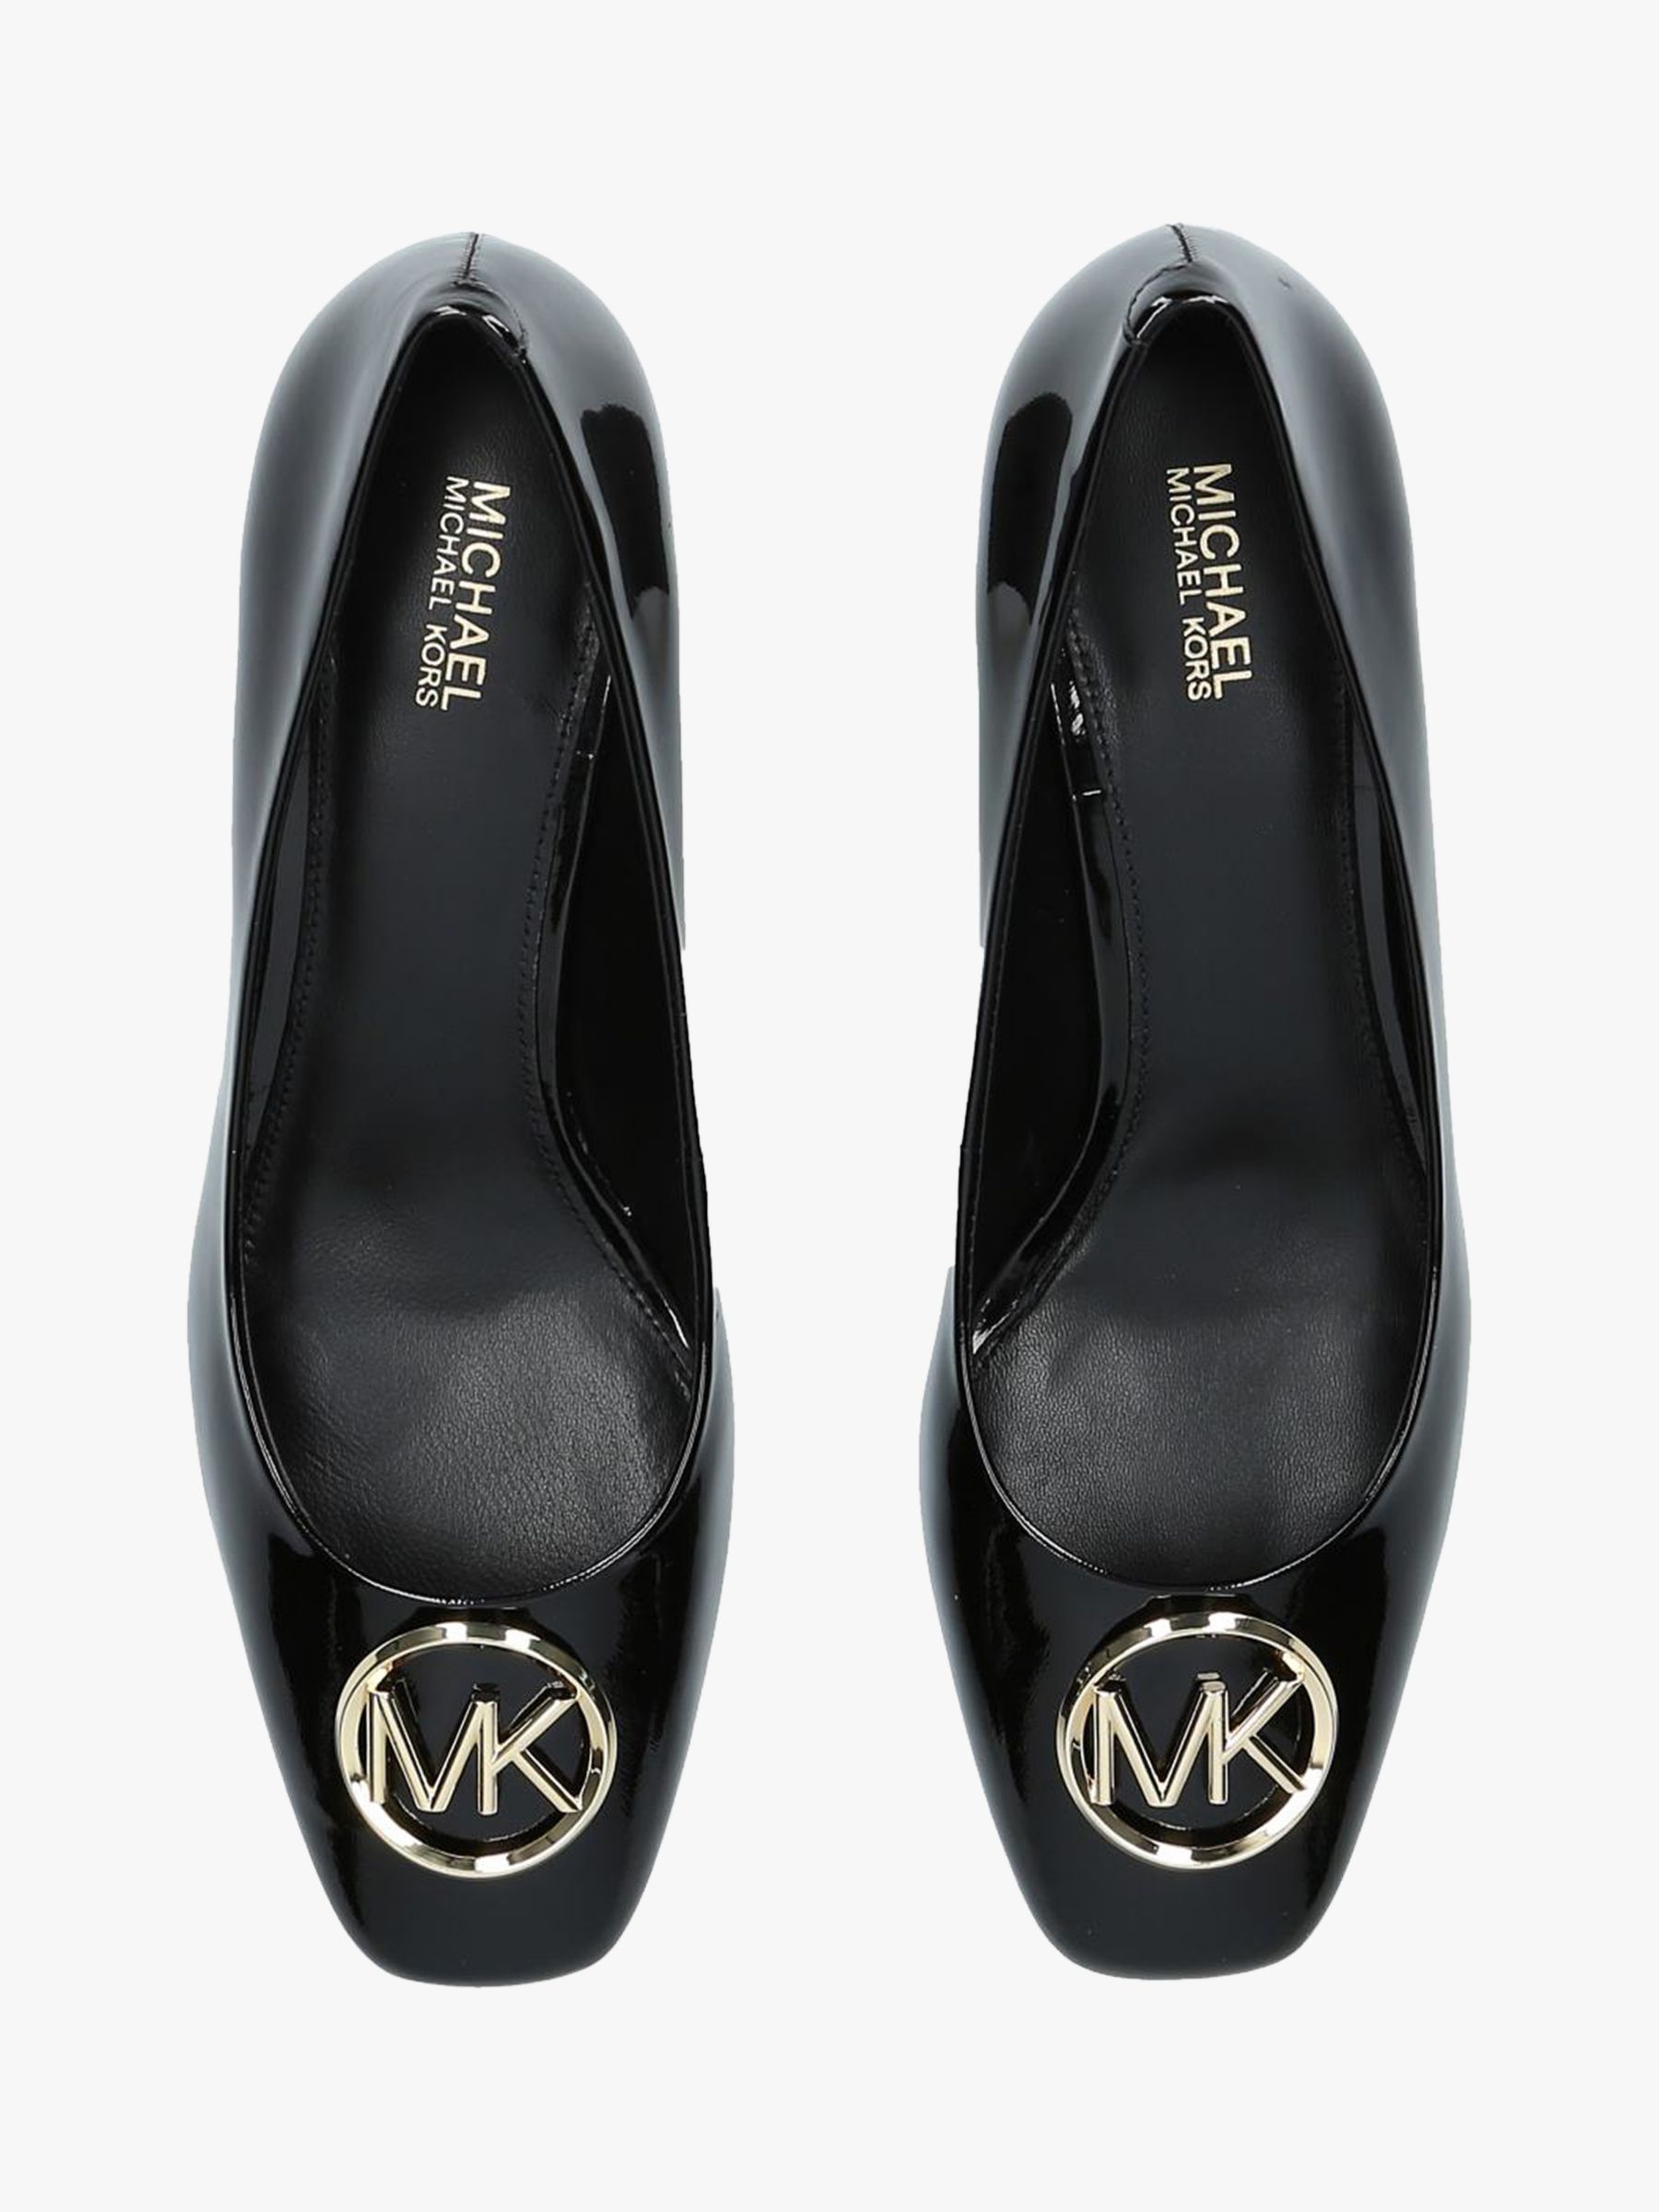 mk high heel sandals